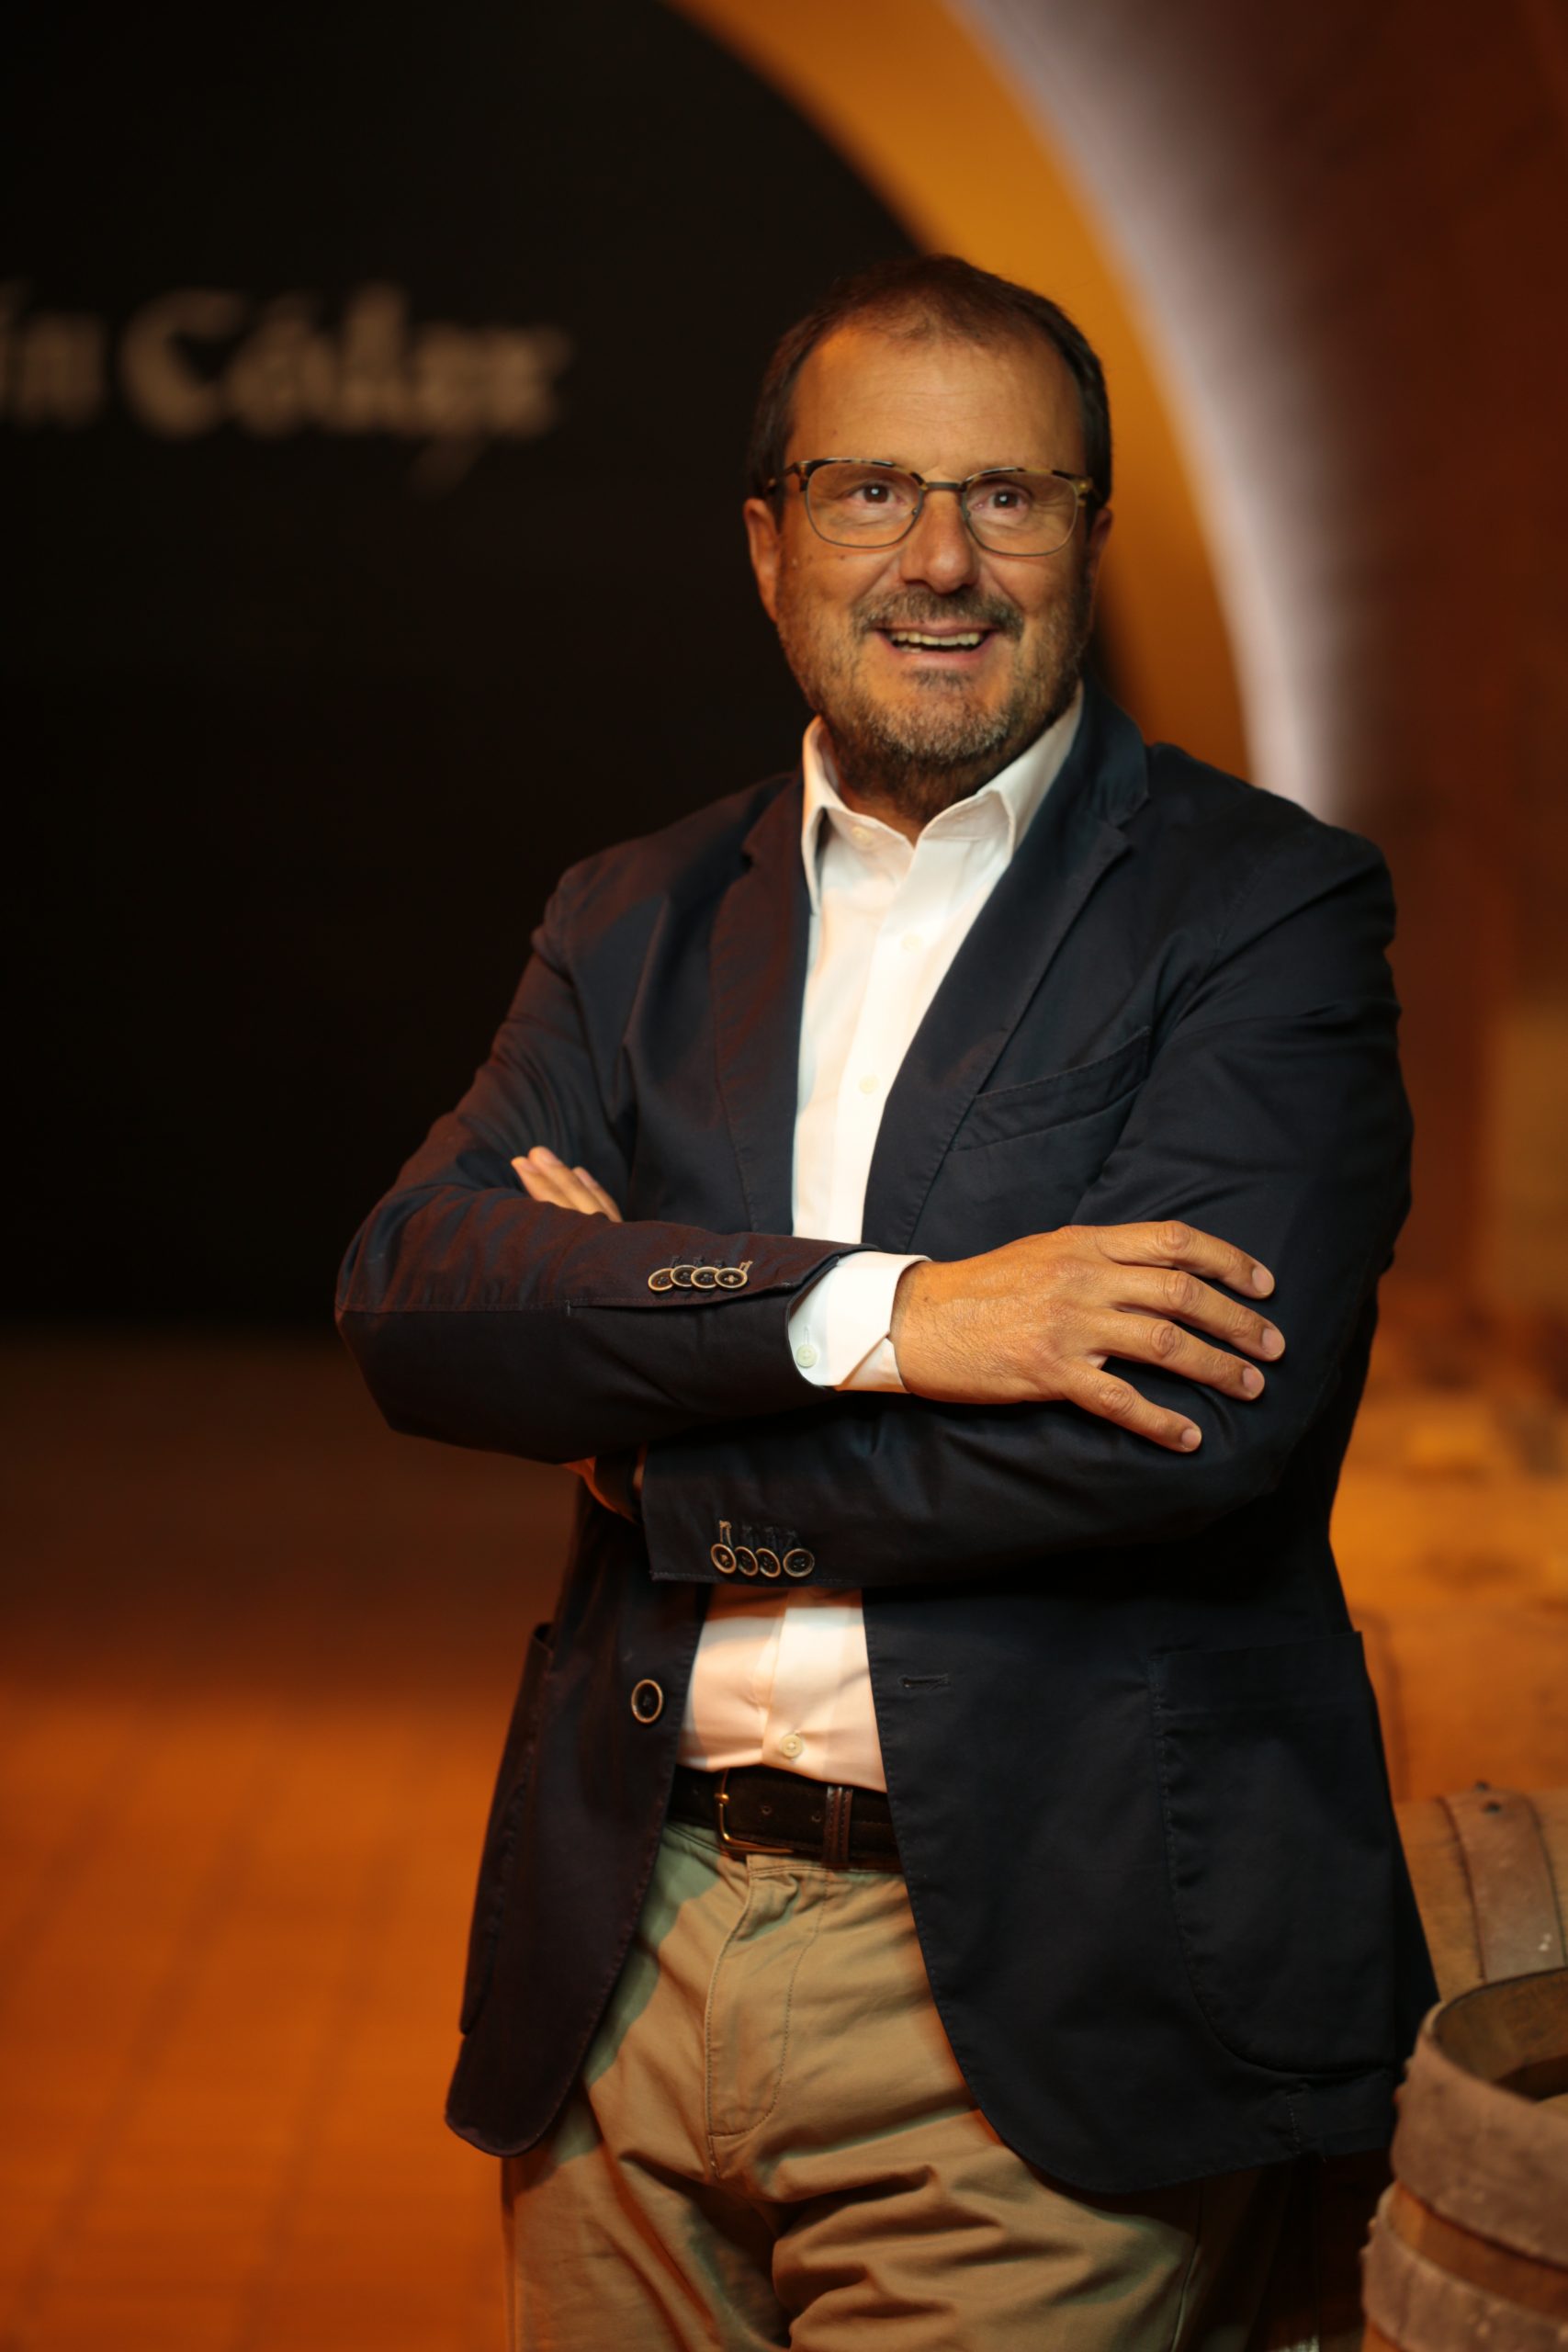 Juan Vázquez, nuevo Presidente del Comité de Marketing de OIVE